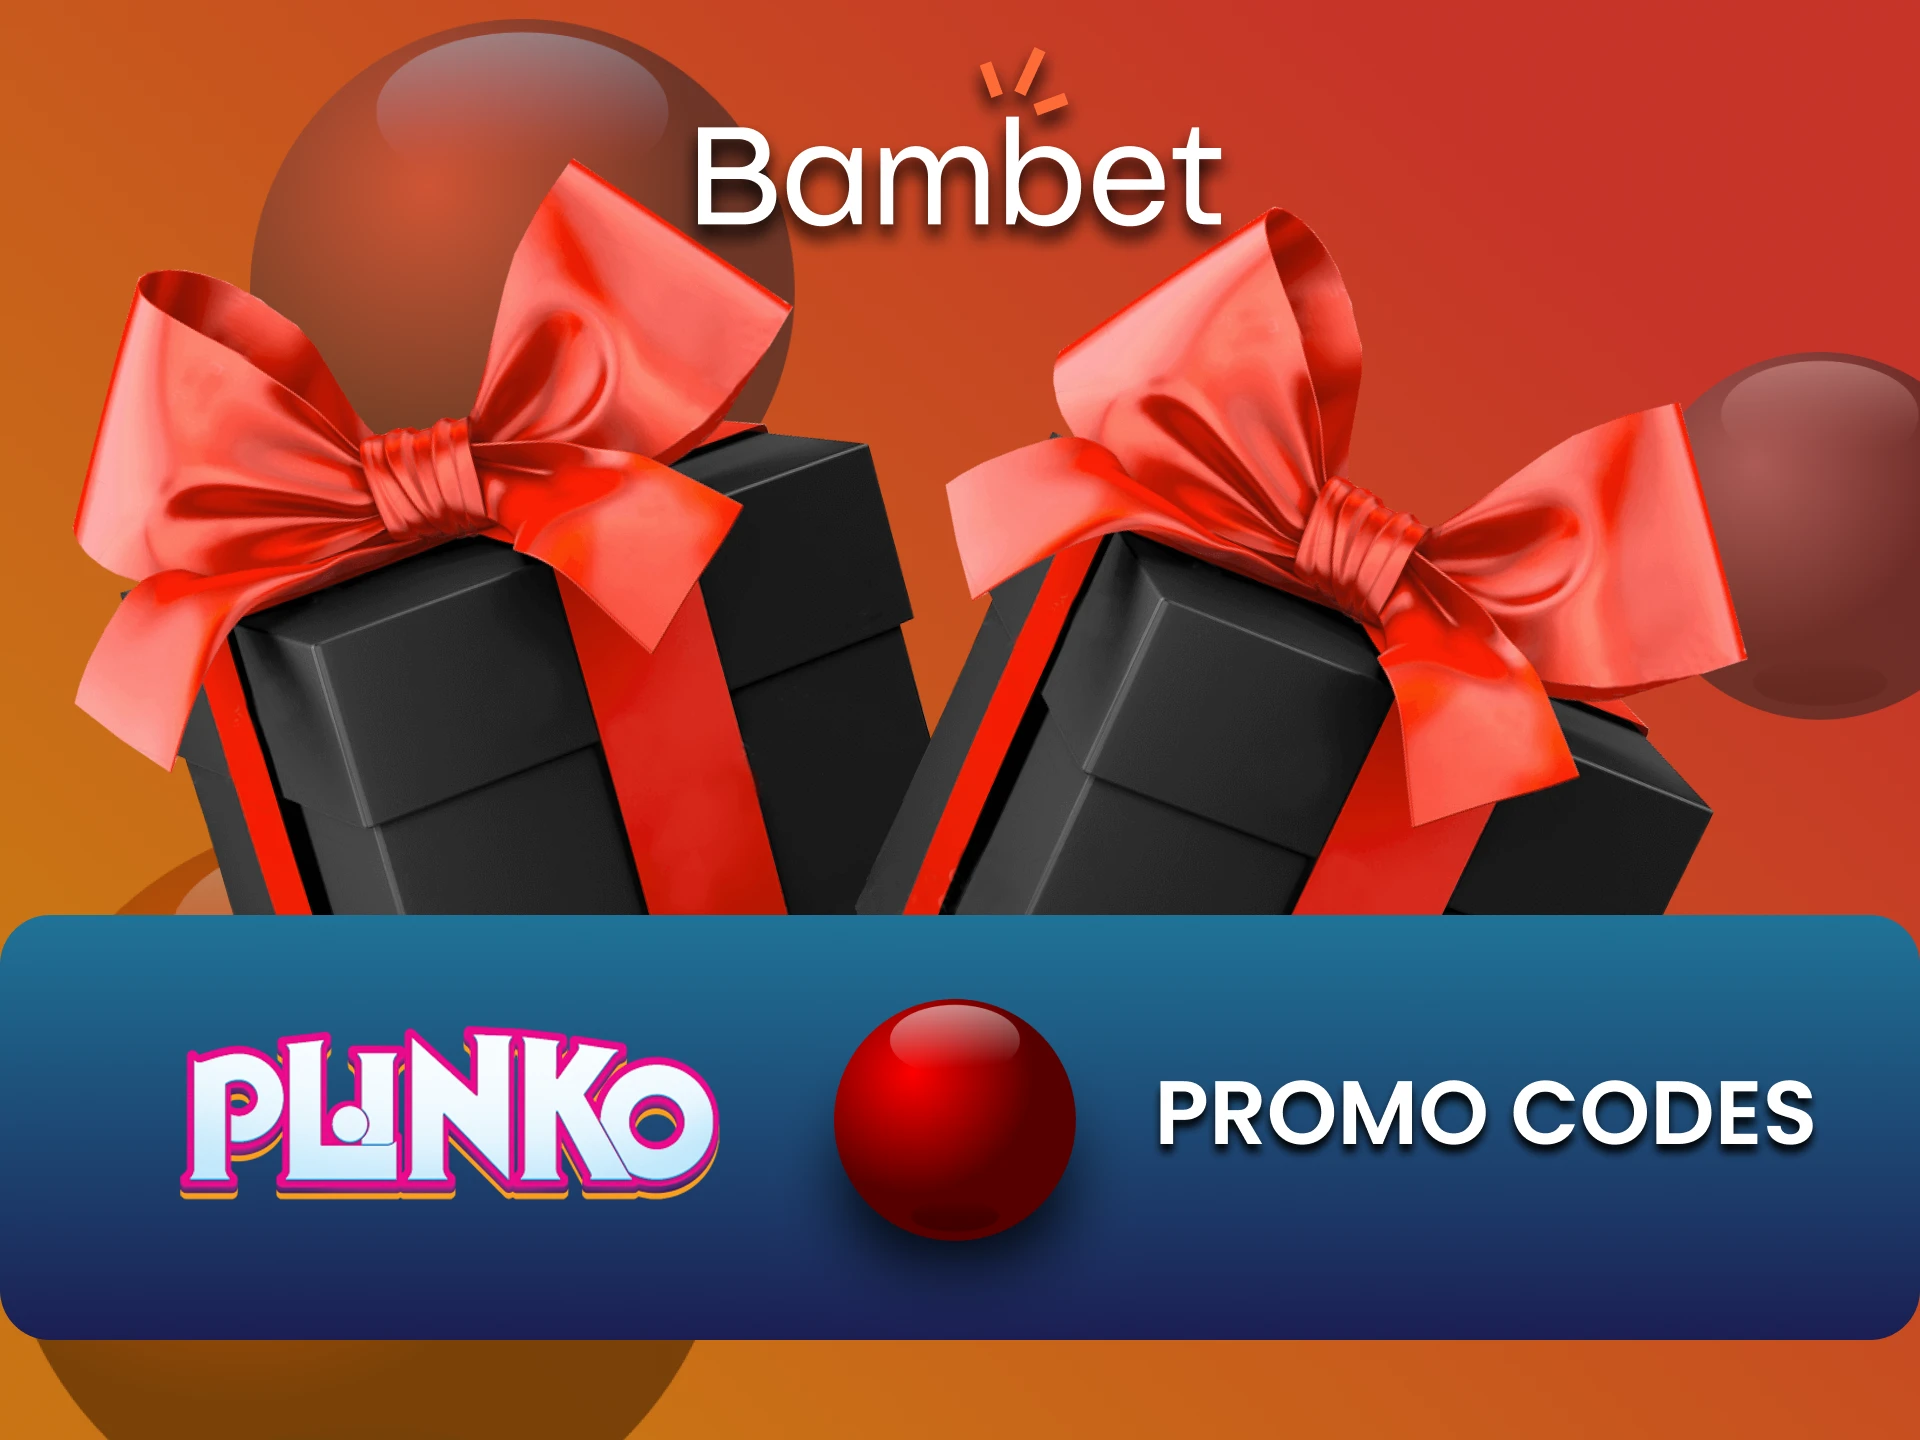 On Bambet you can get a bonus using a promo code.